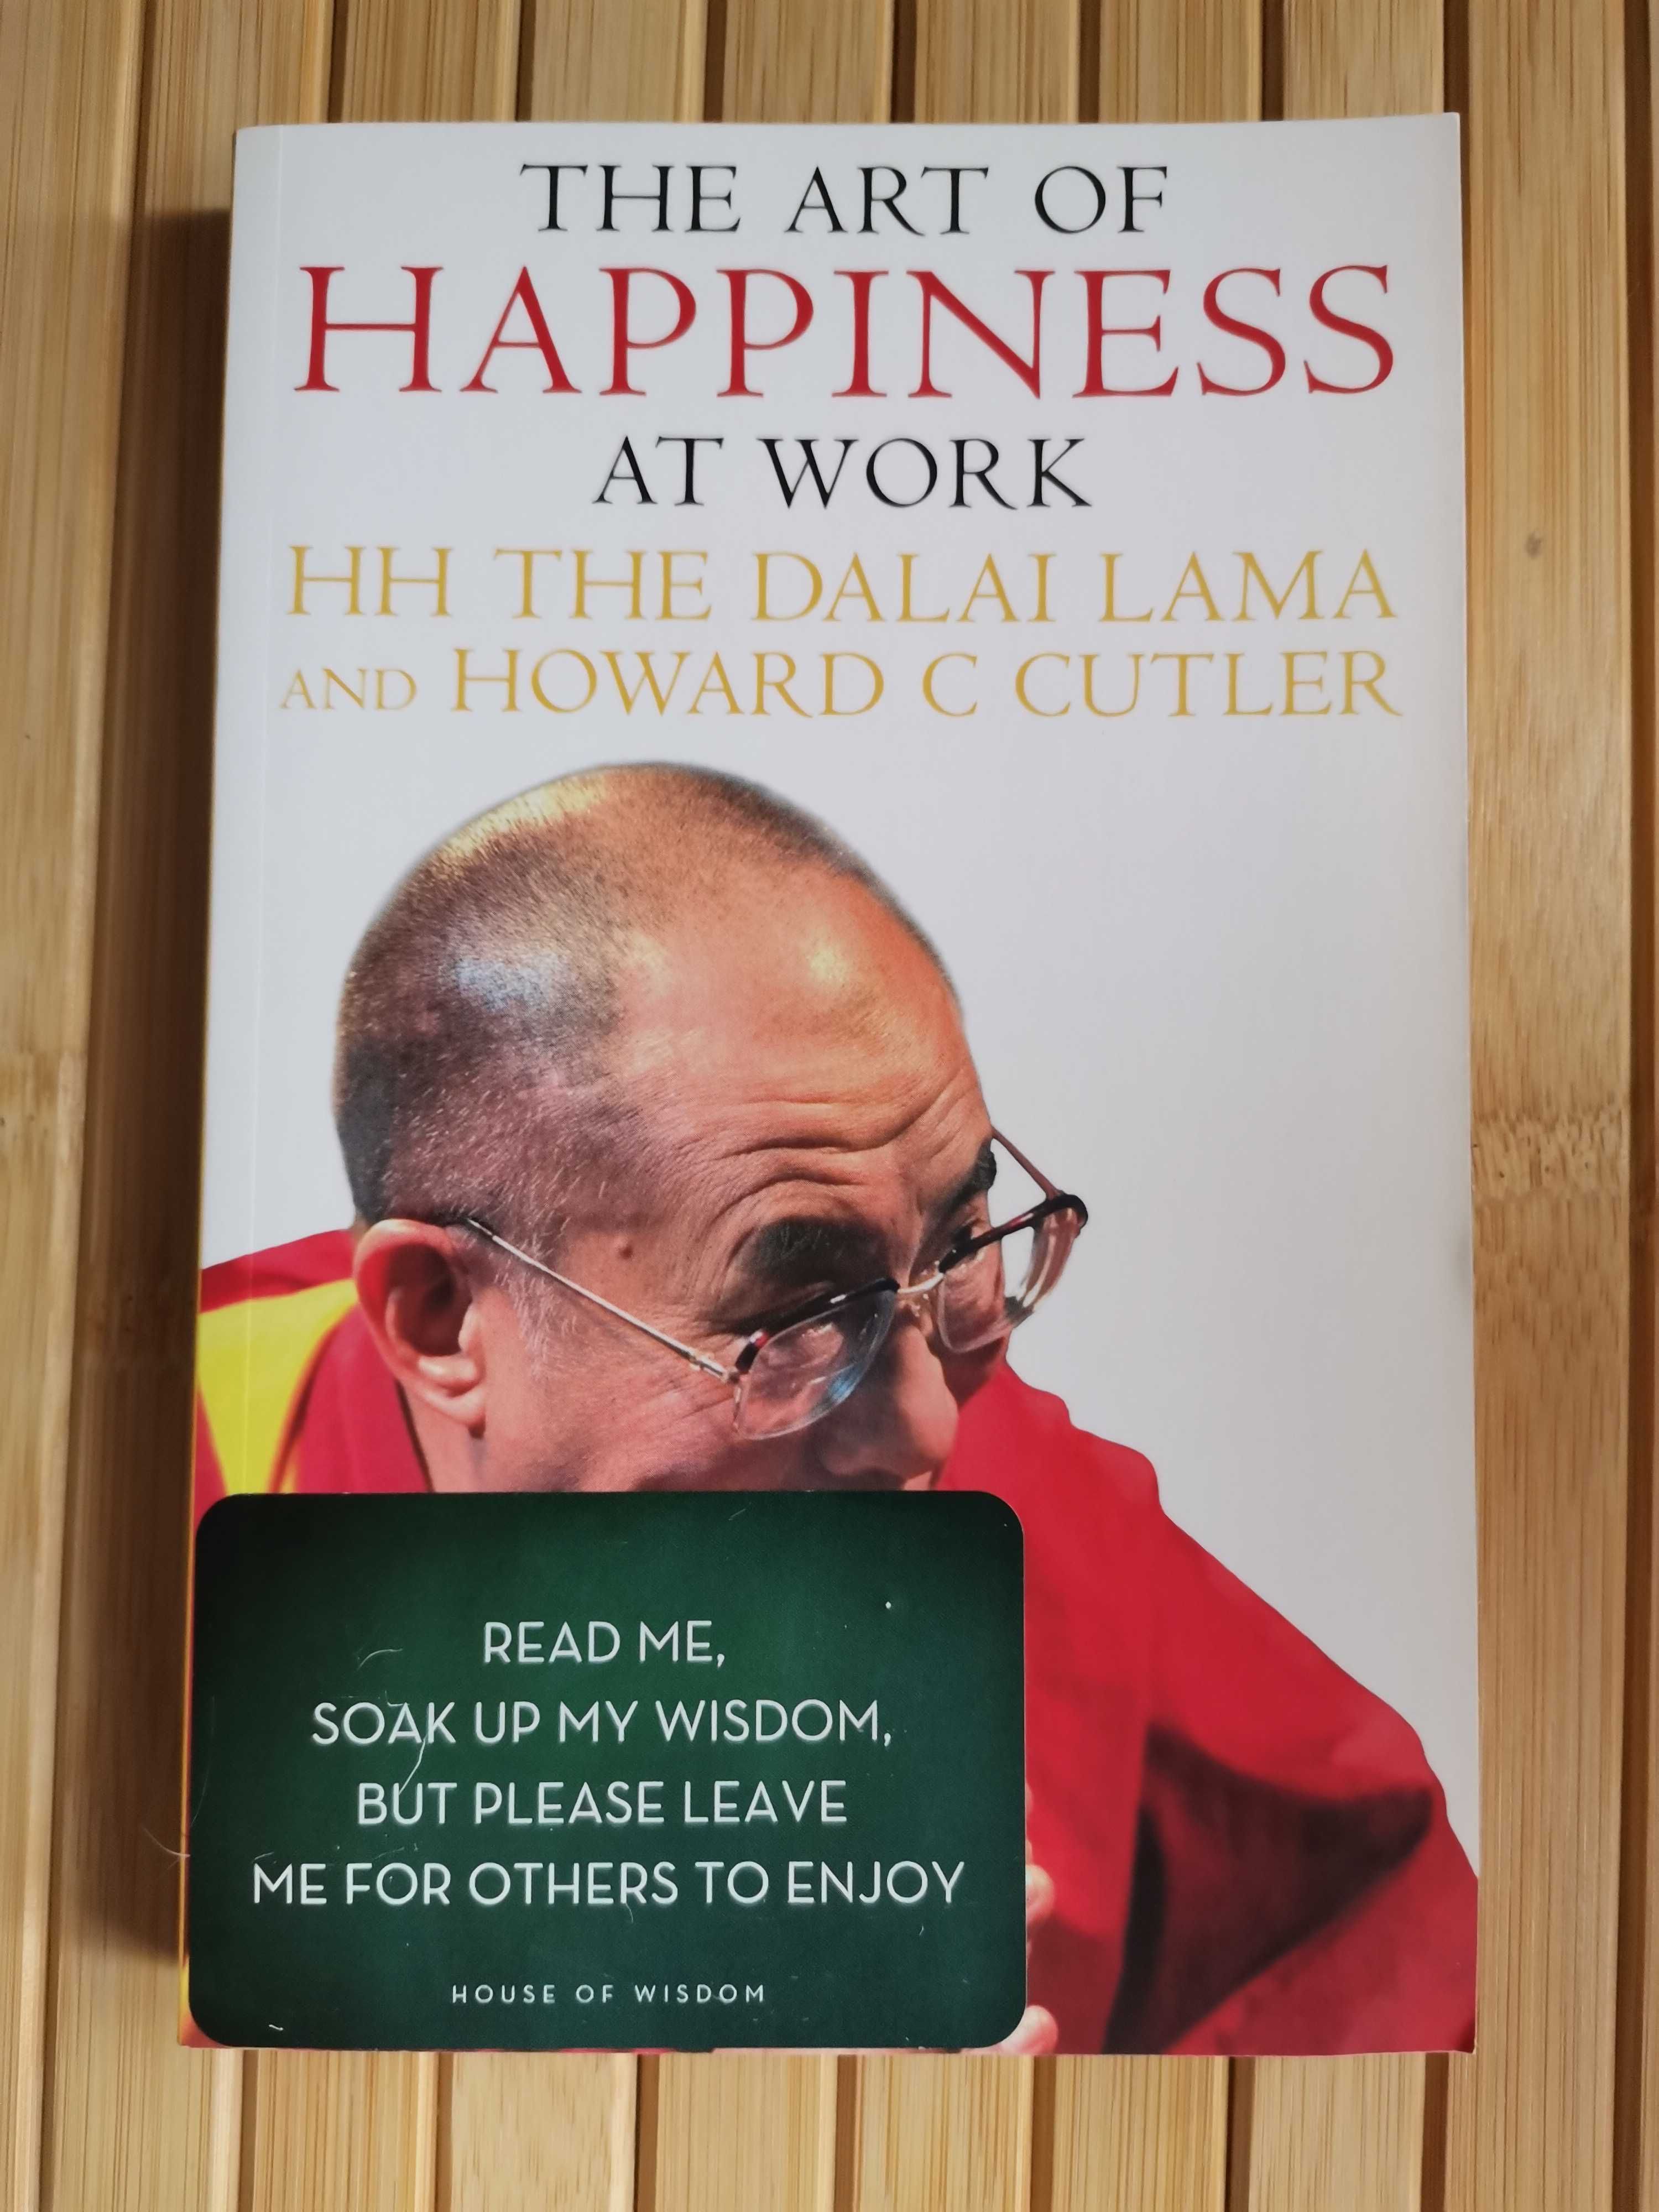 Dalajlama The art of happiness at work Real foto